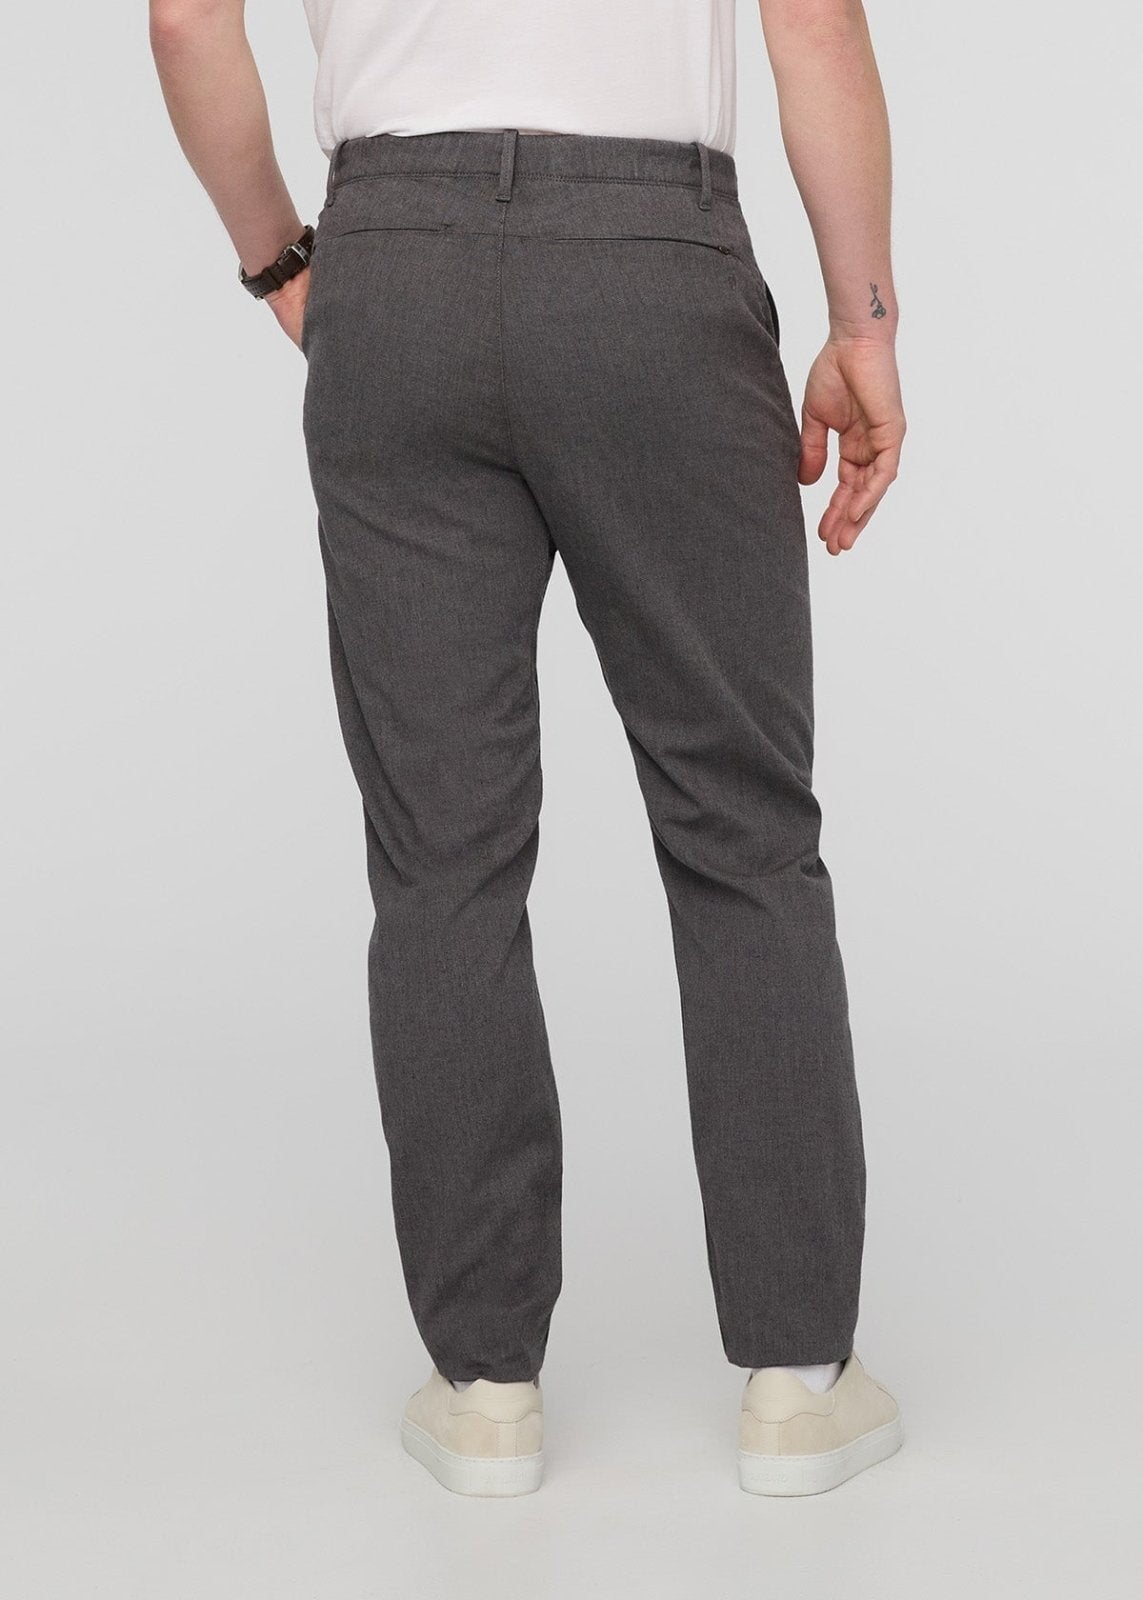 Buy SRR Mens' Formal Pants Combo | Men Pants | Formal Office wear Pants for  Men Pack of 2 | Men Regular Fit Trousers Combo - Khaki and Black at  Amazon.in